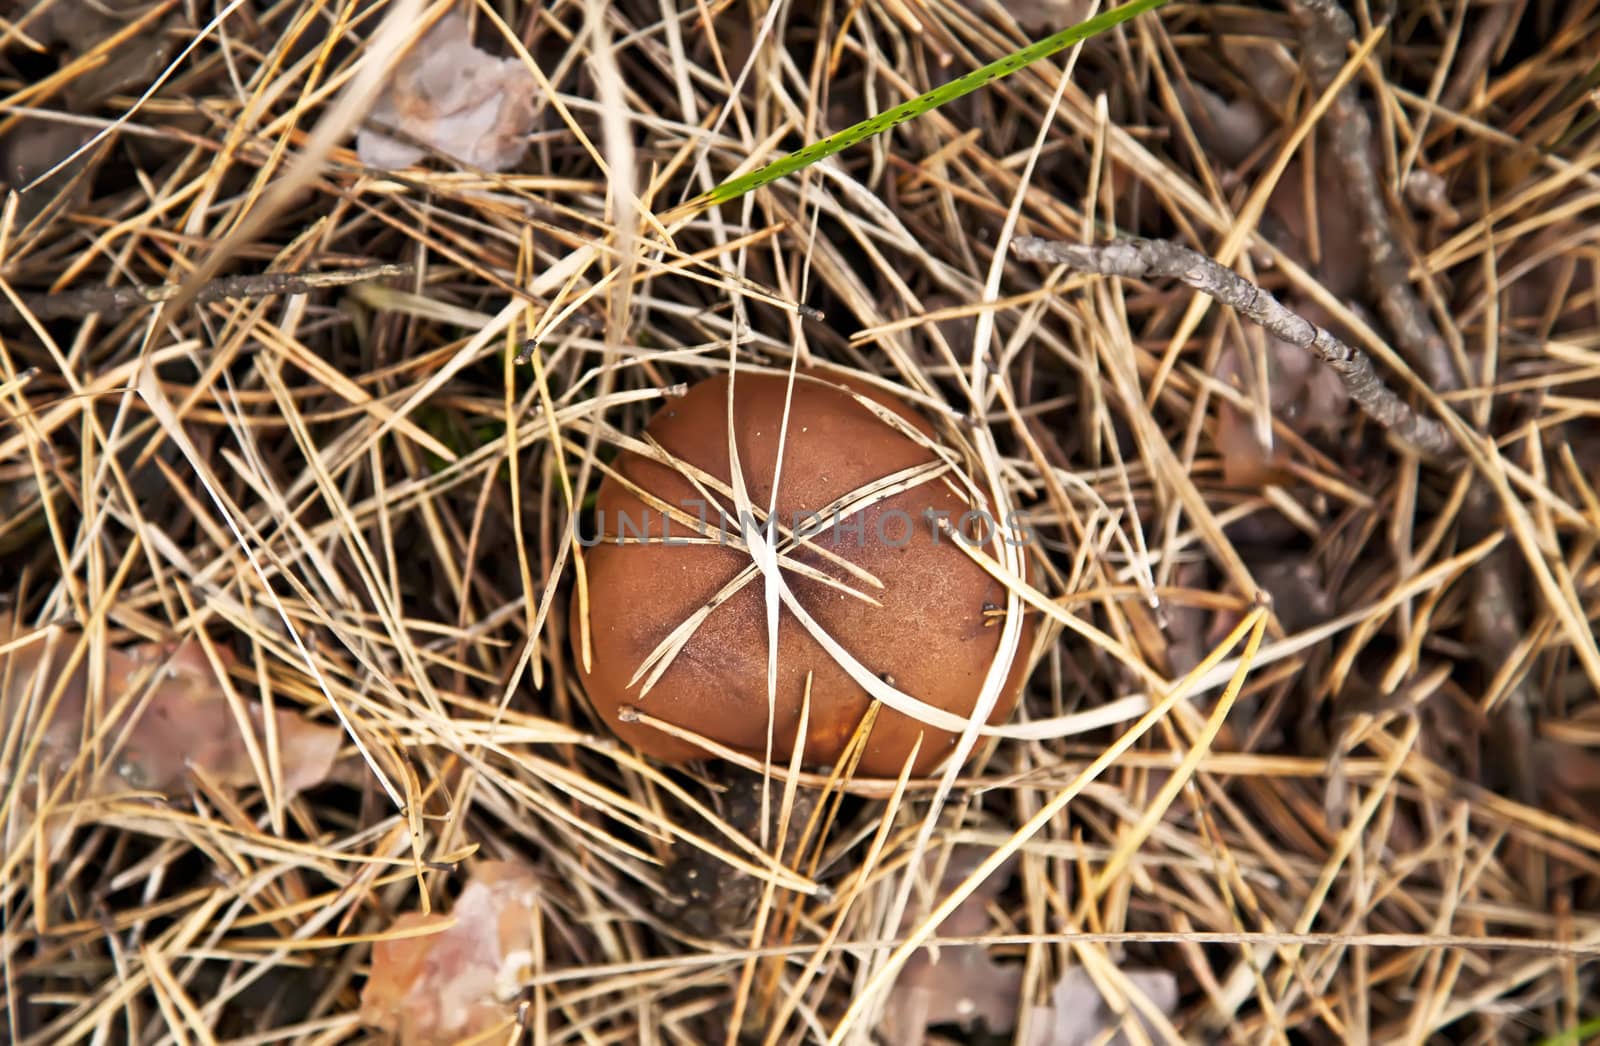 Boletus luteus mushroom in dry grass by RawGroup